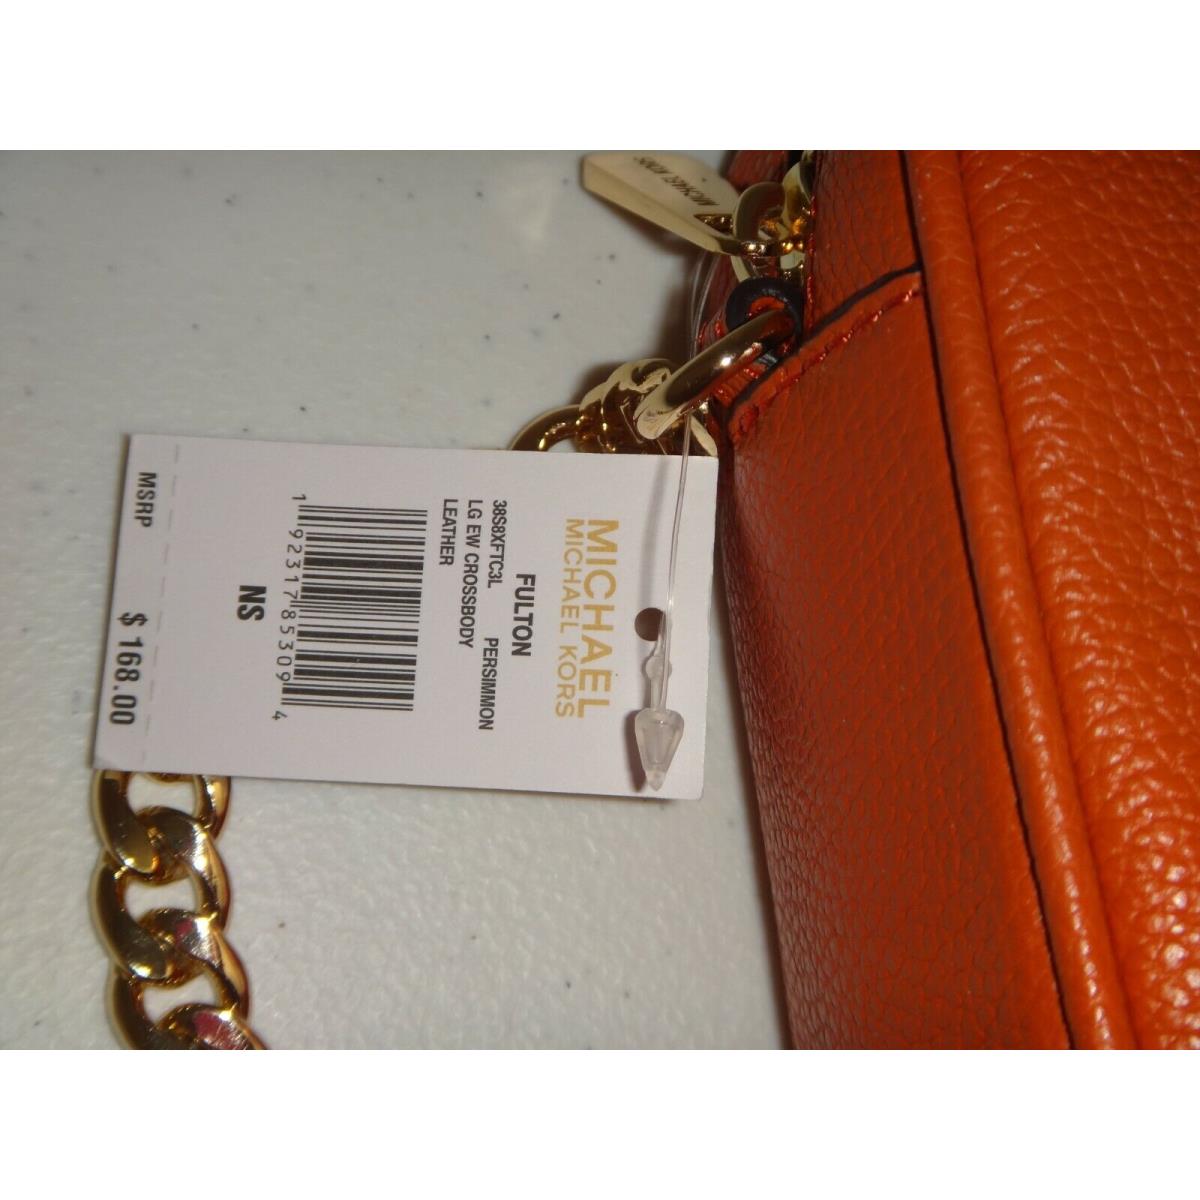 Buy the Michael Kors Orange Persimmon Leather Shoulder Handbag